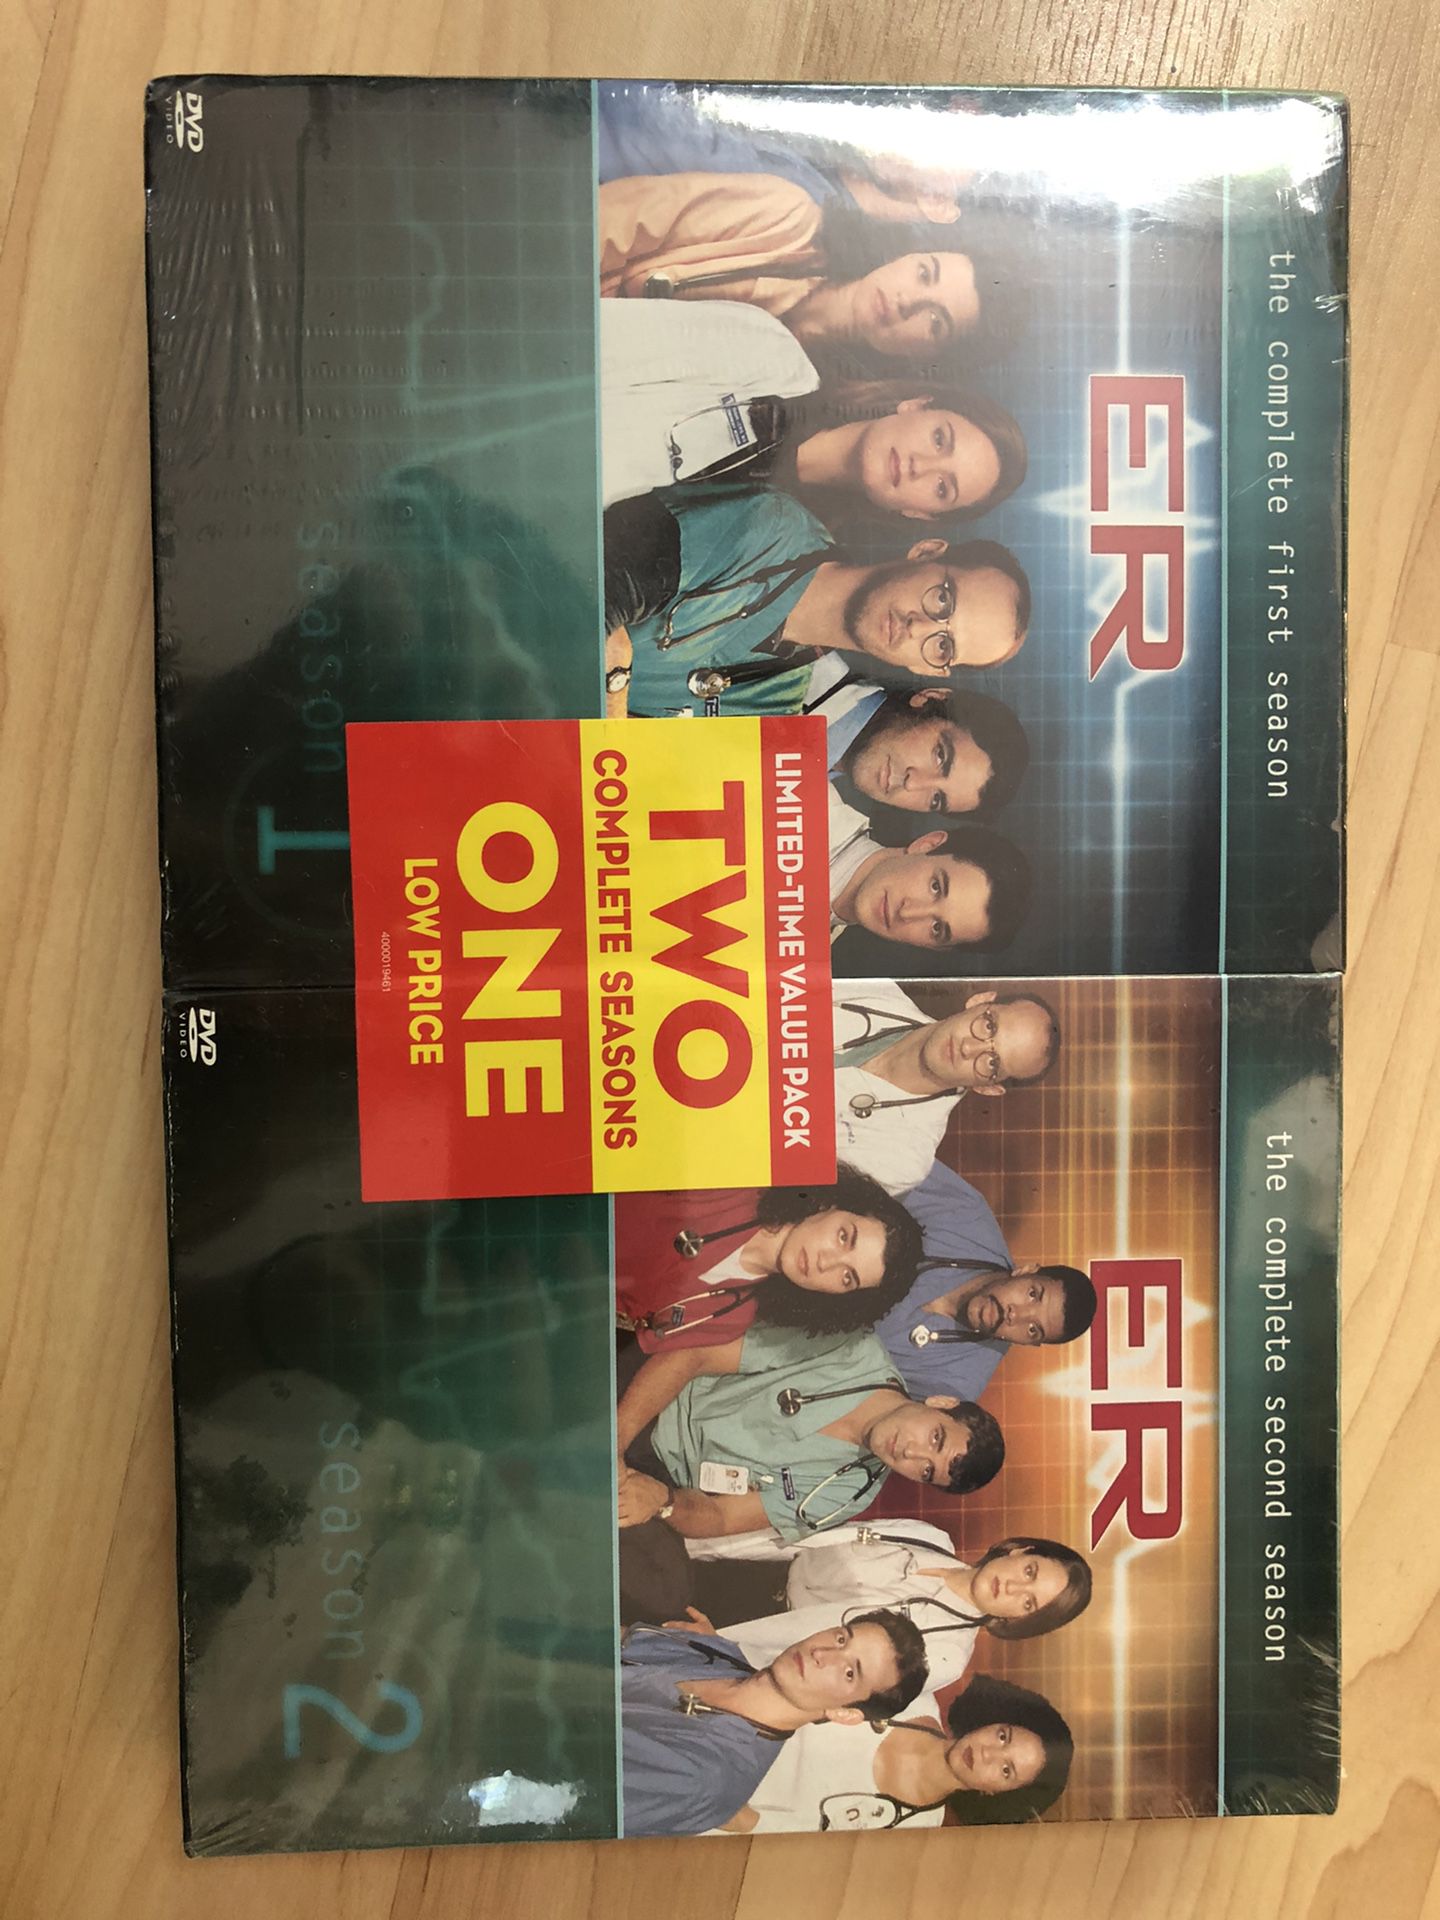 ER Seasons 1 & 2 DVD set - unopened